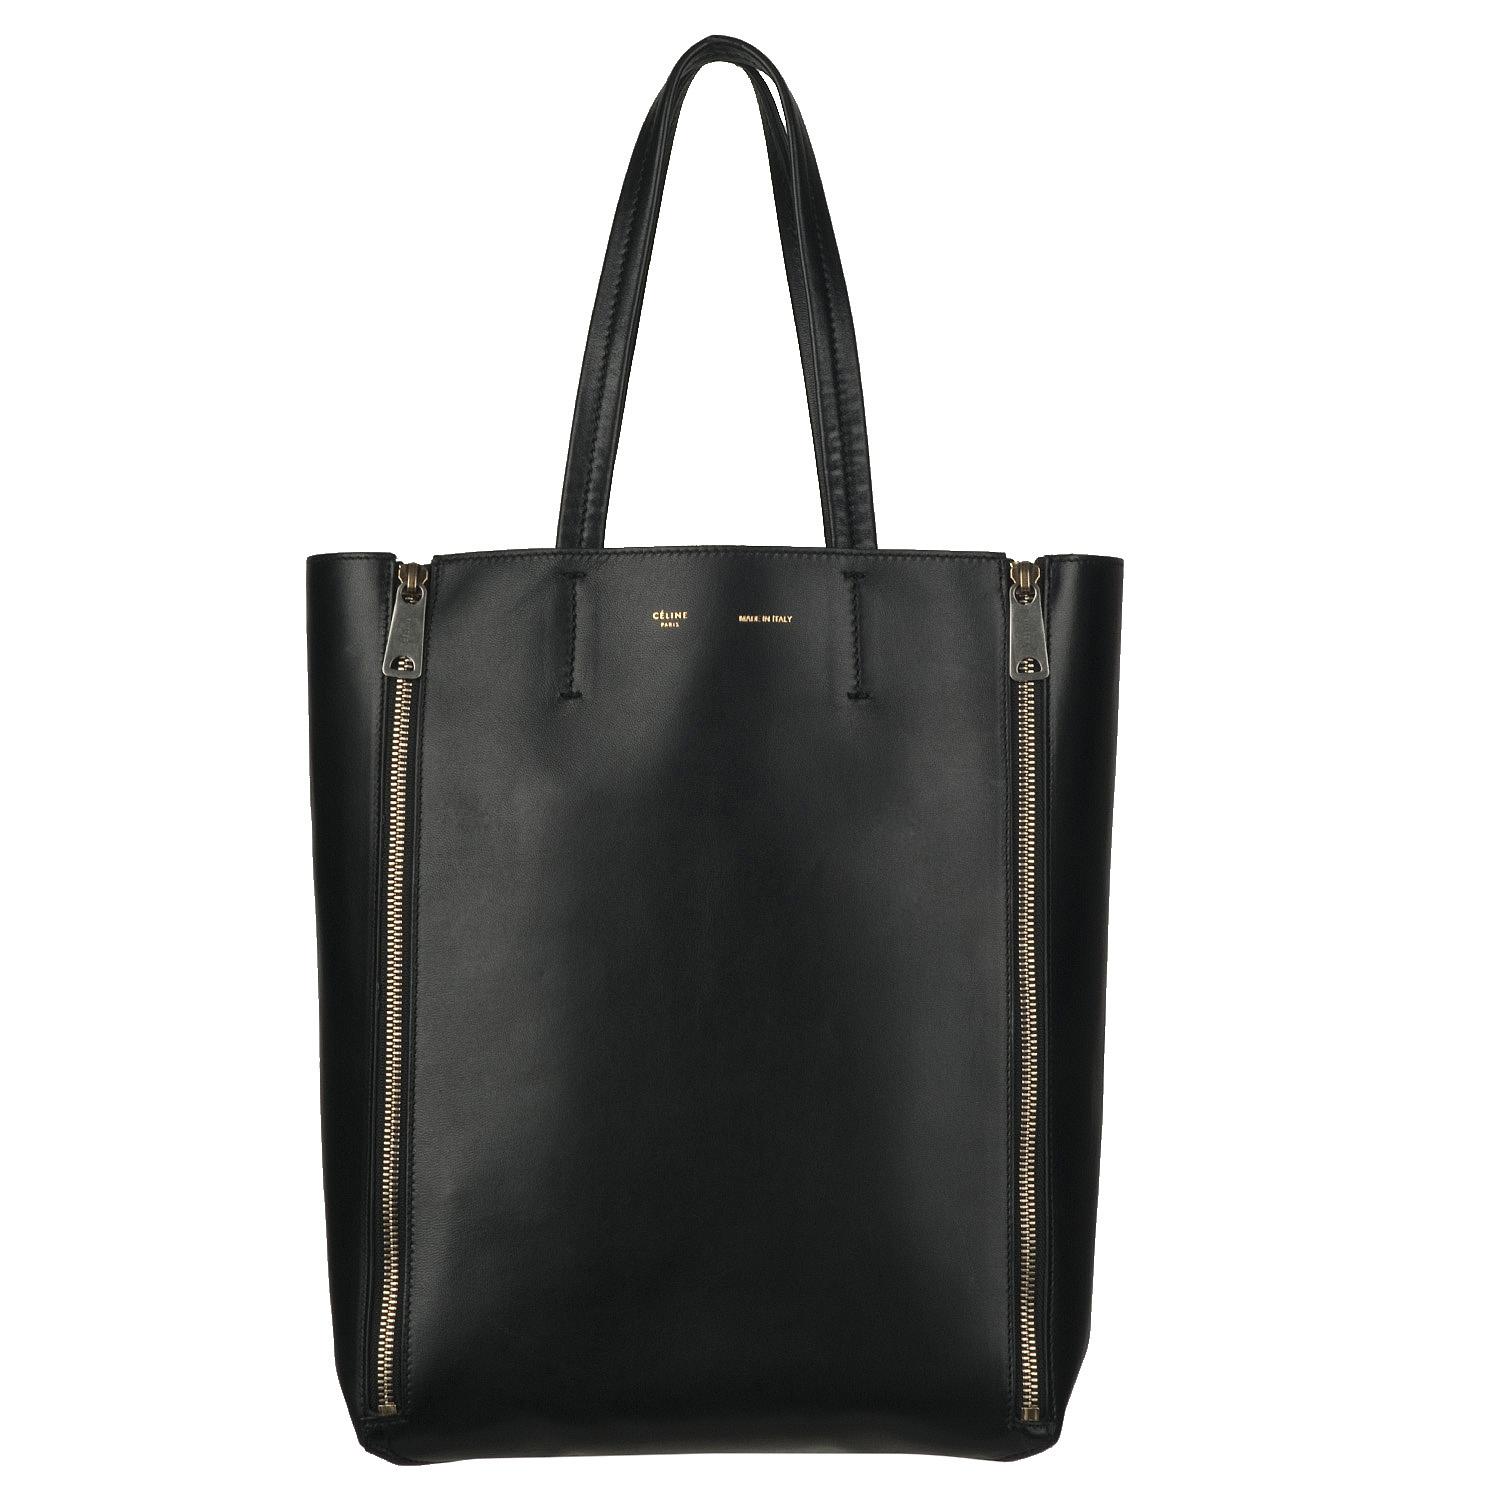 Celine Black Leather Expandable Tote Bag - JustCampus